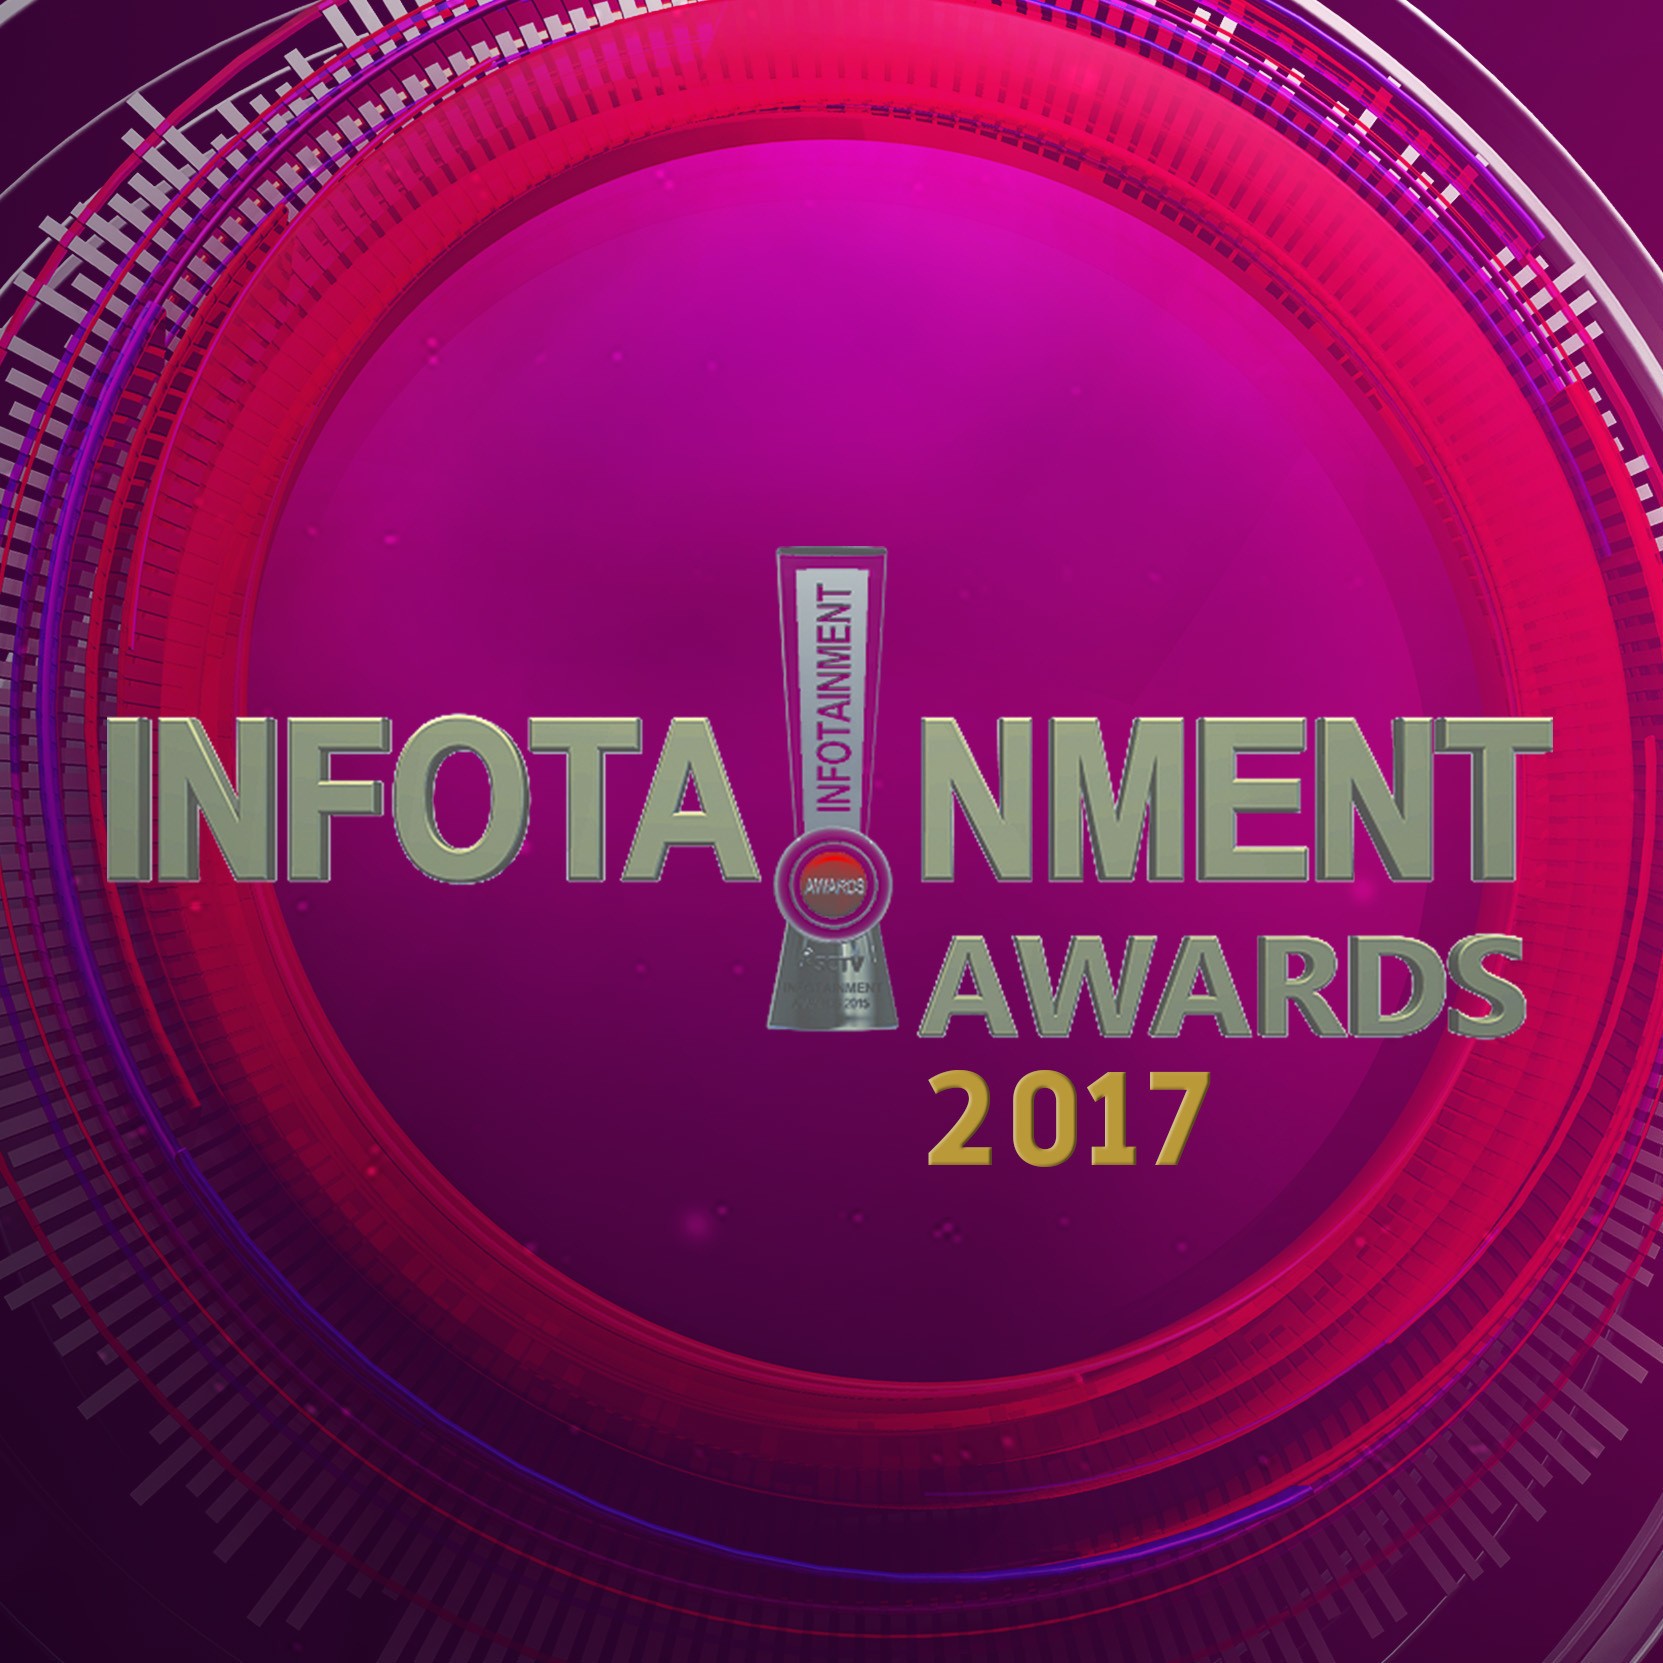 infotainment awards 2017 de1546